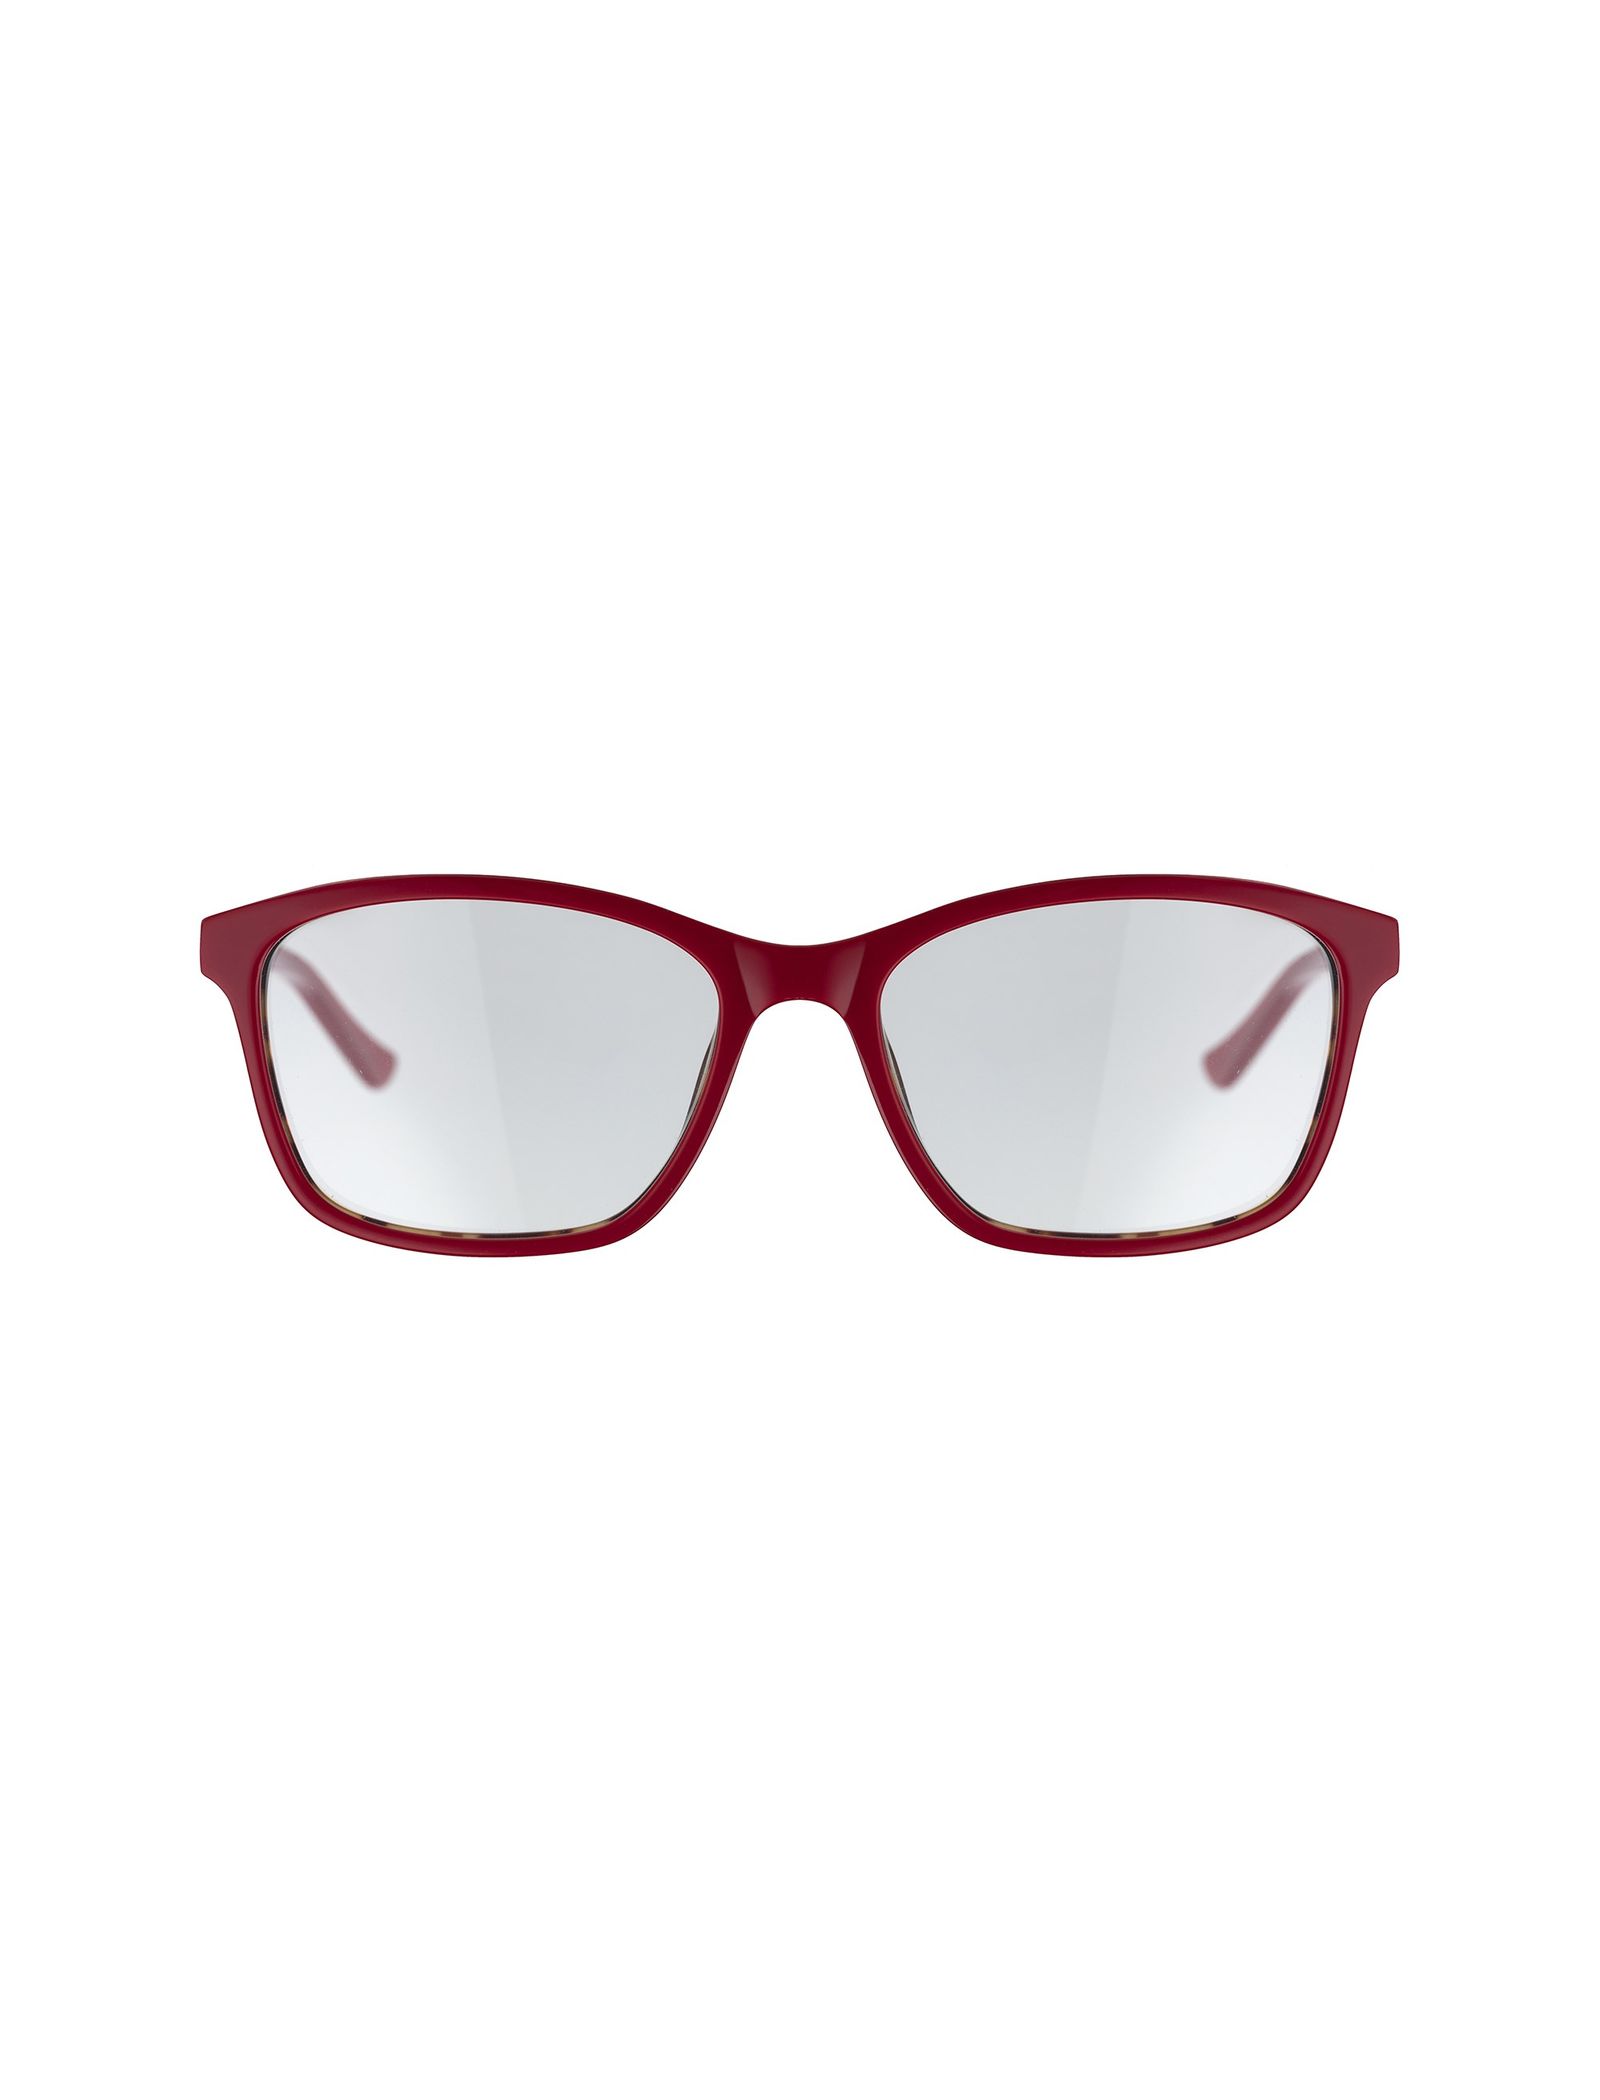 عینک طبی ویفرر زنانه - پپه جینز - قرمز - 2